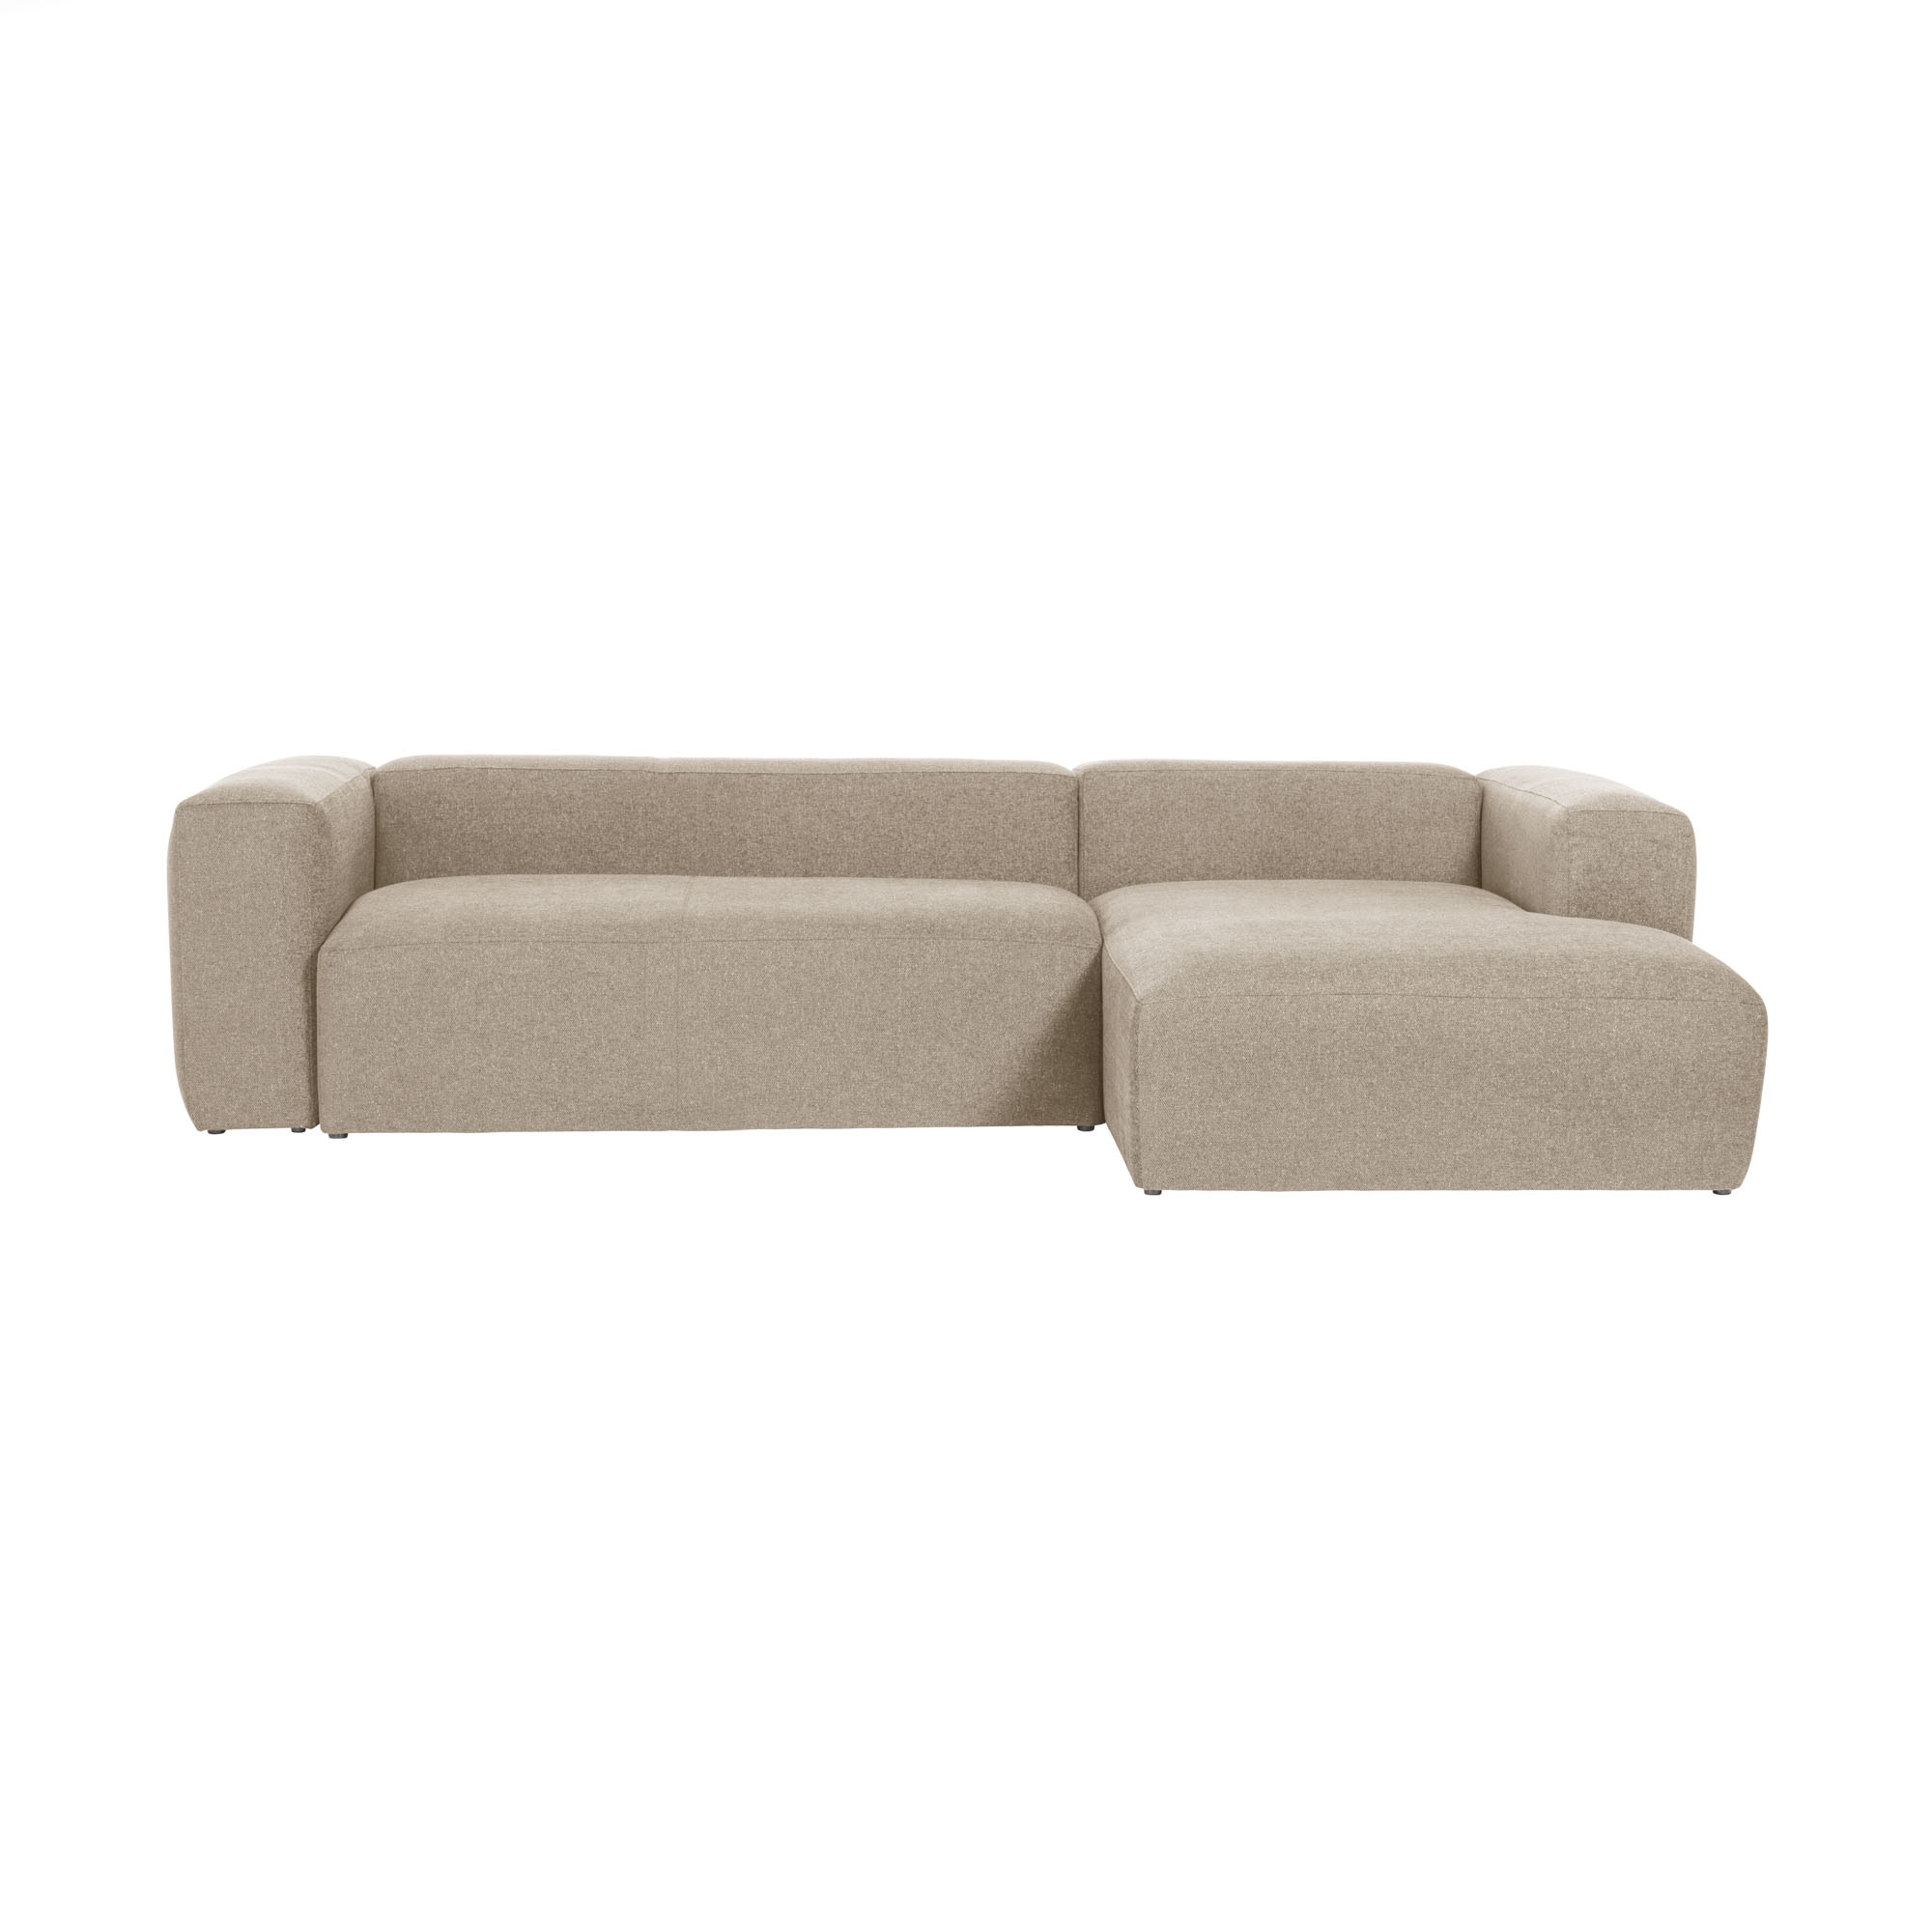 LAFORMA Blok 3 pers. sofa, m. højre chaiselong - beige stof